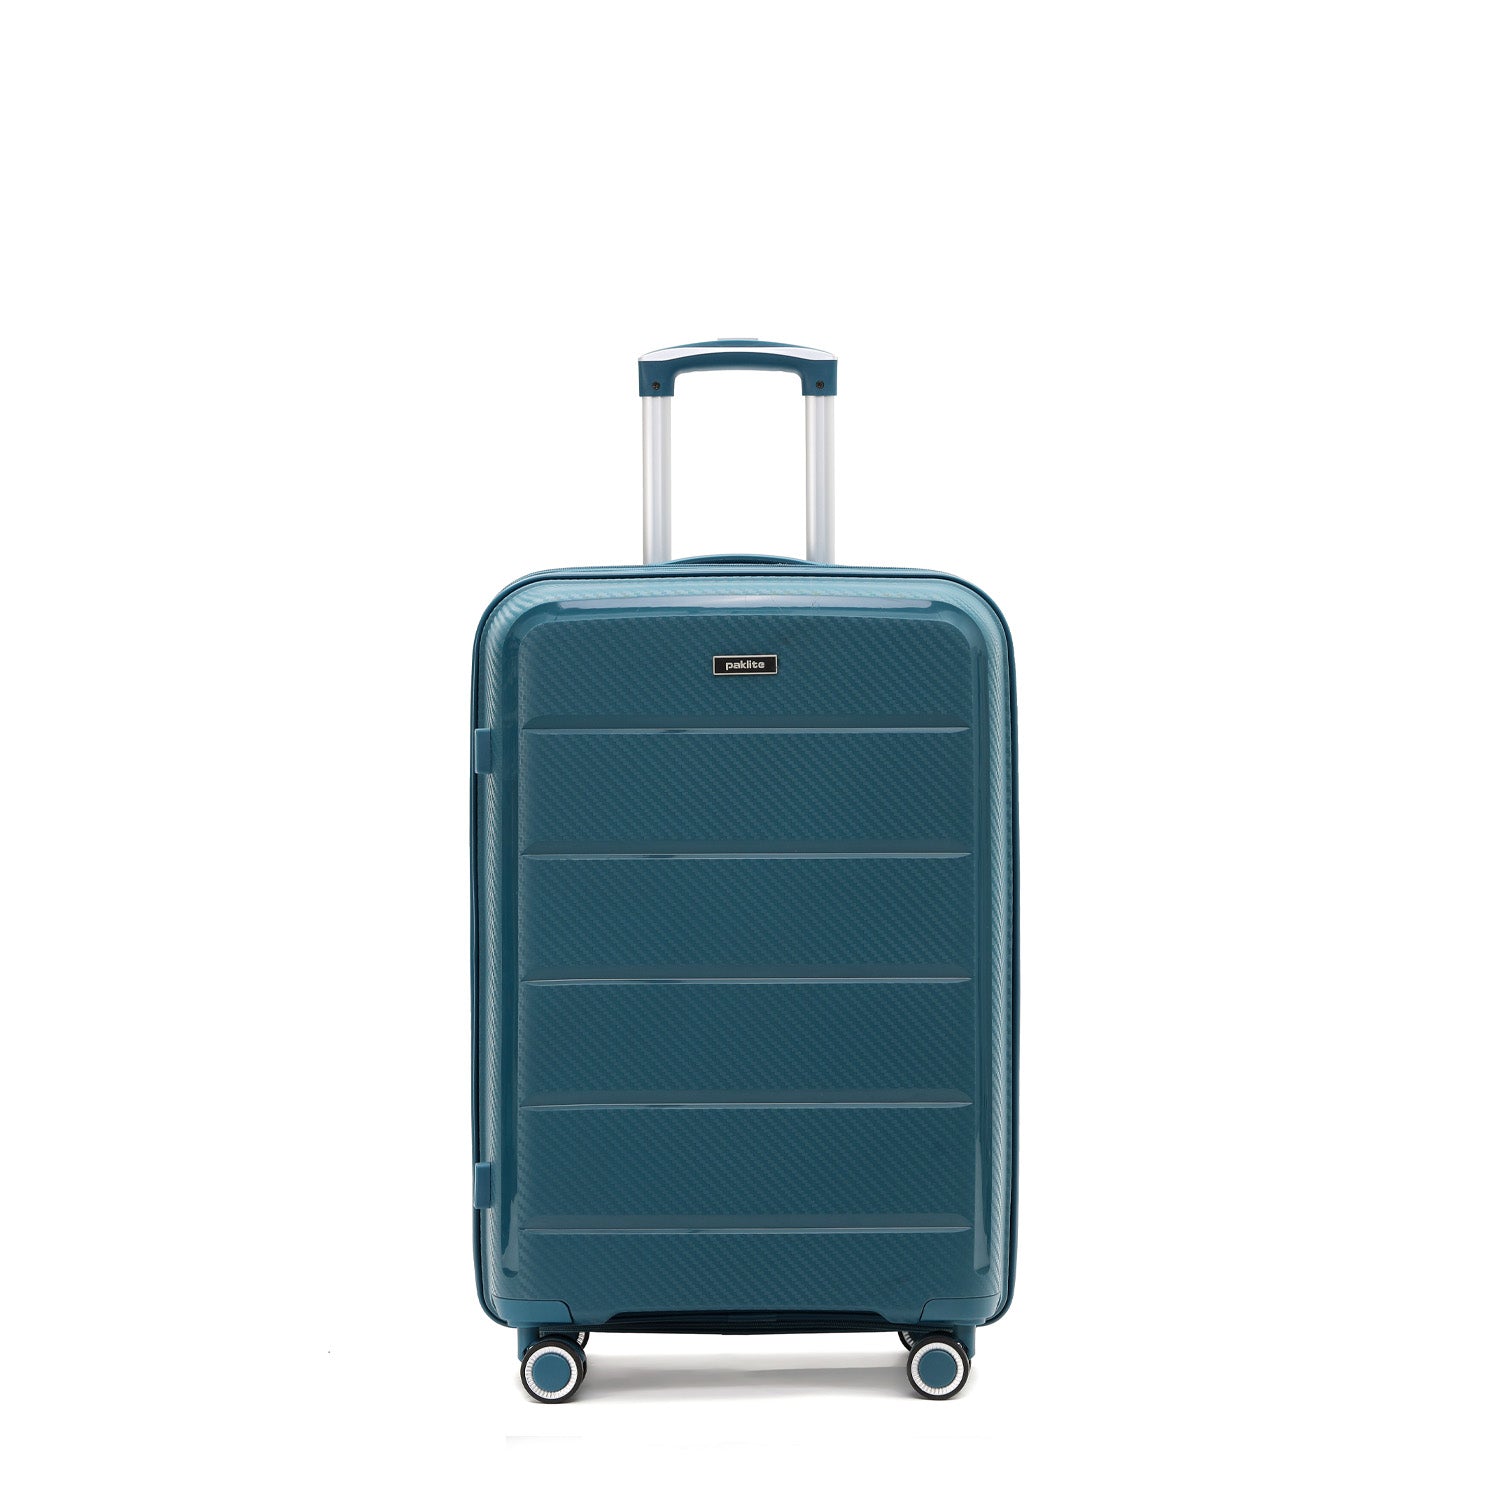 Paklite - PA7350 Medium 65cm spinner suitcase - Blue-1